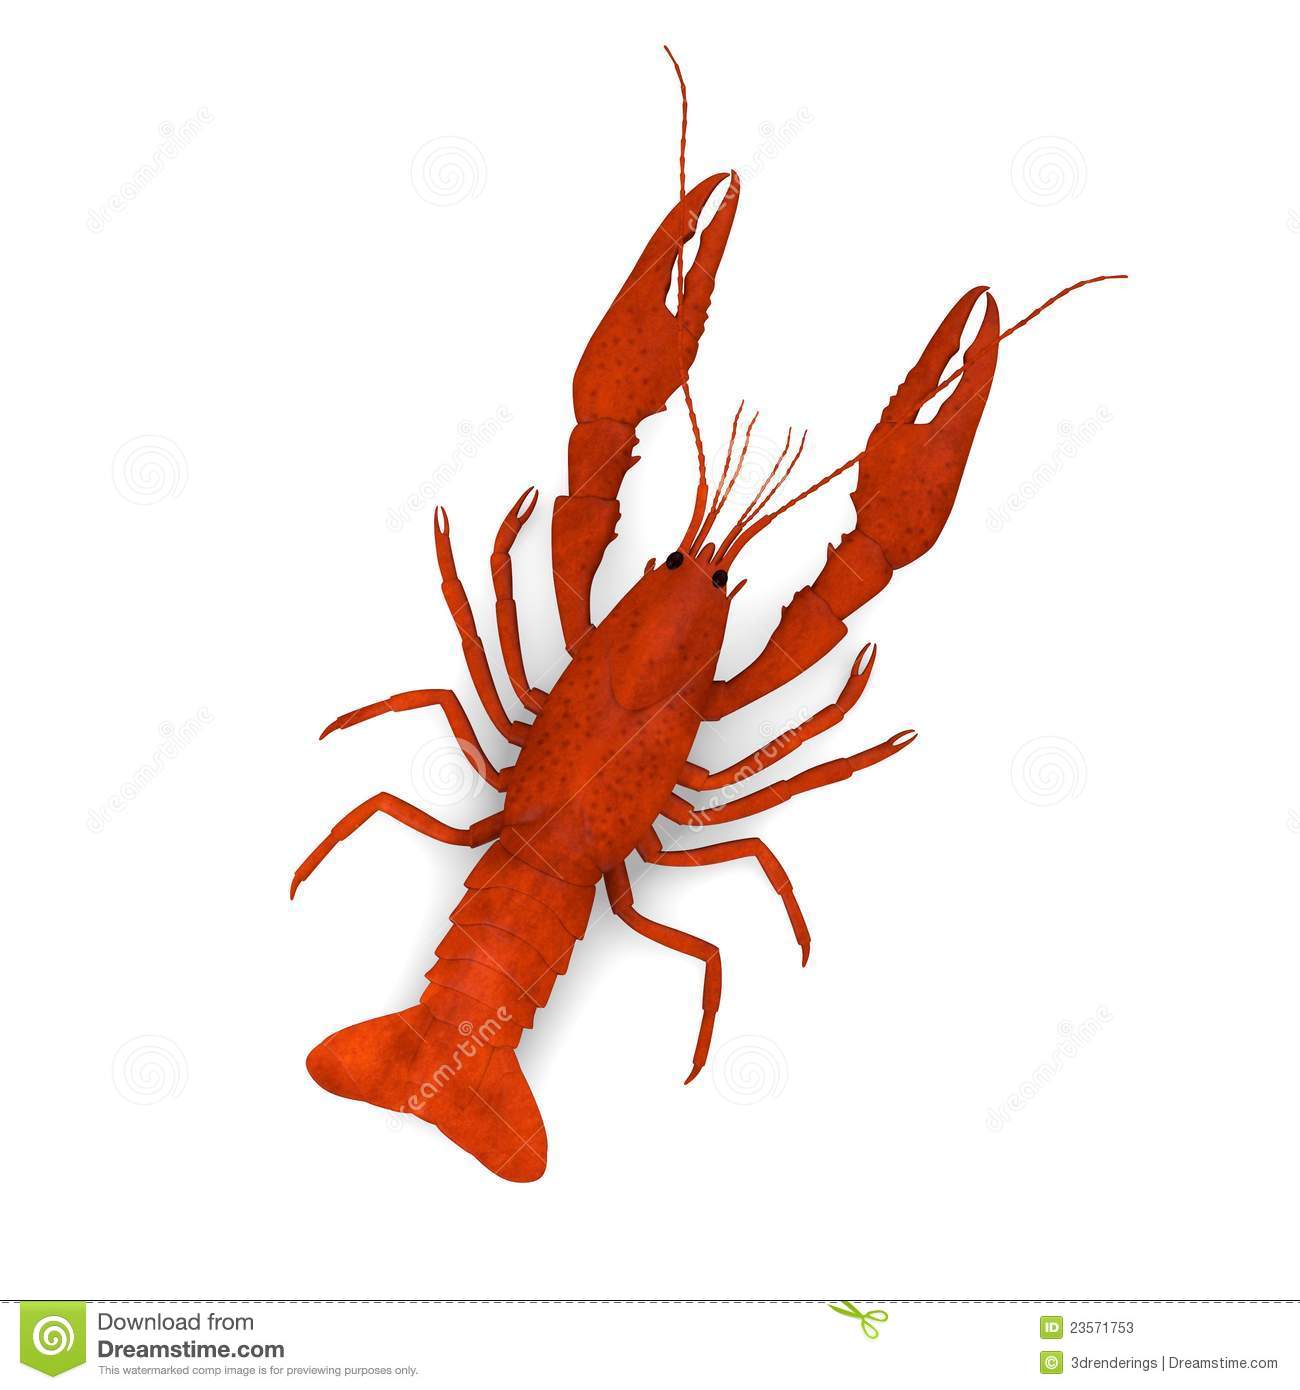 Dead red crayfish Stock Photos